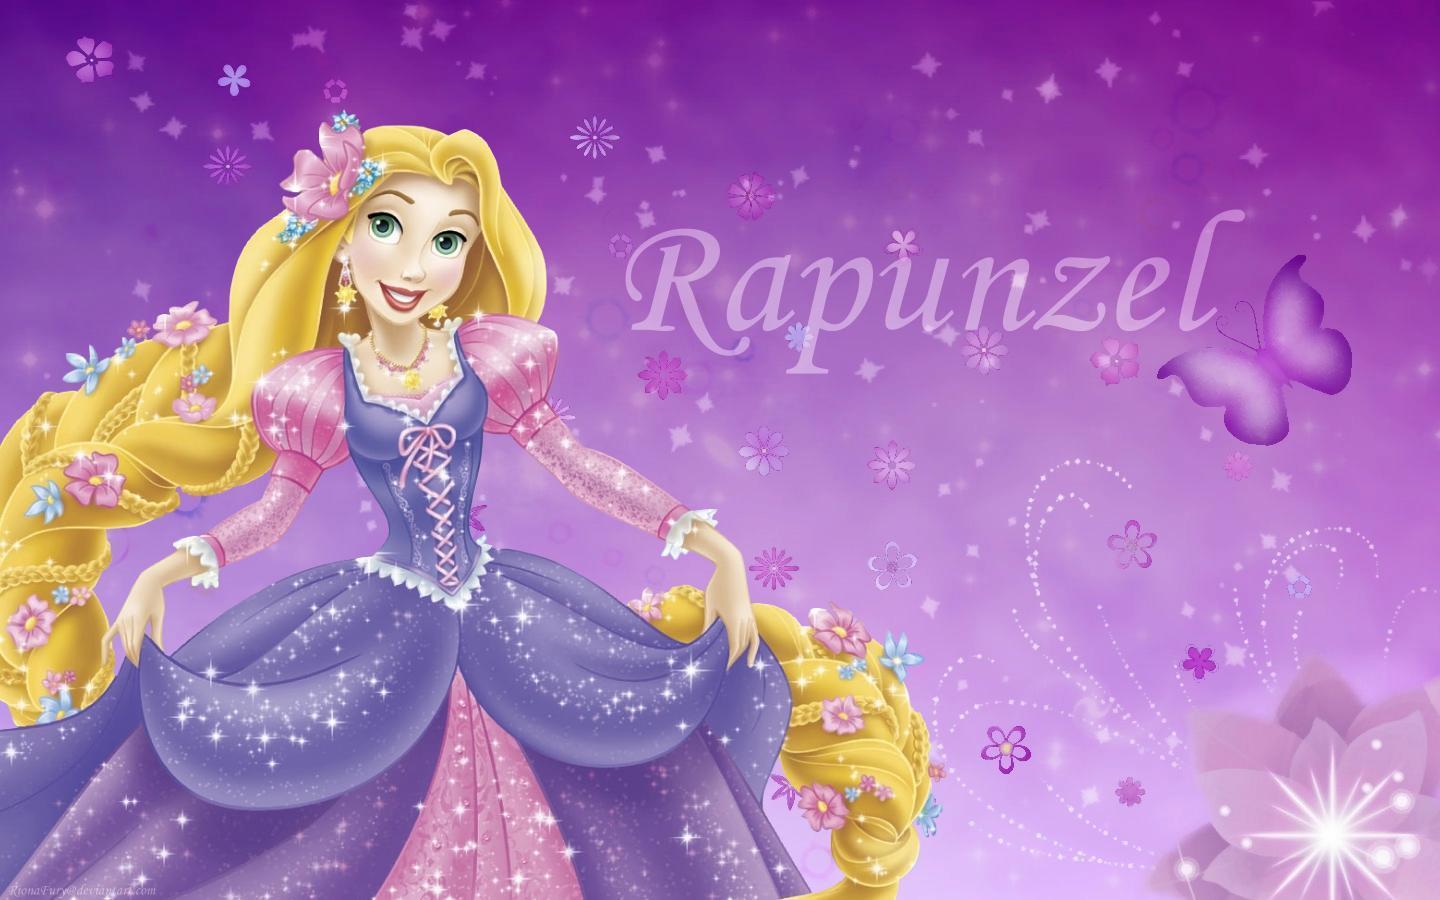 Disney Princess Images Princess Rapunzel Wallpaper  Rapunzel Disney PNG  Image  Transparent PNG Free Download on SeekPNG